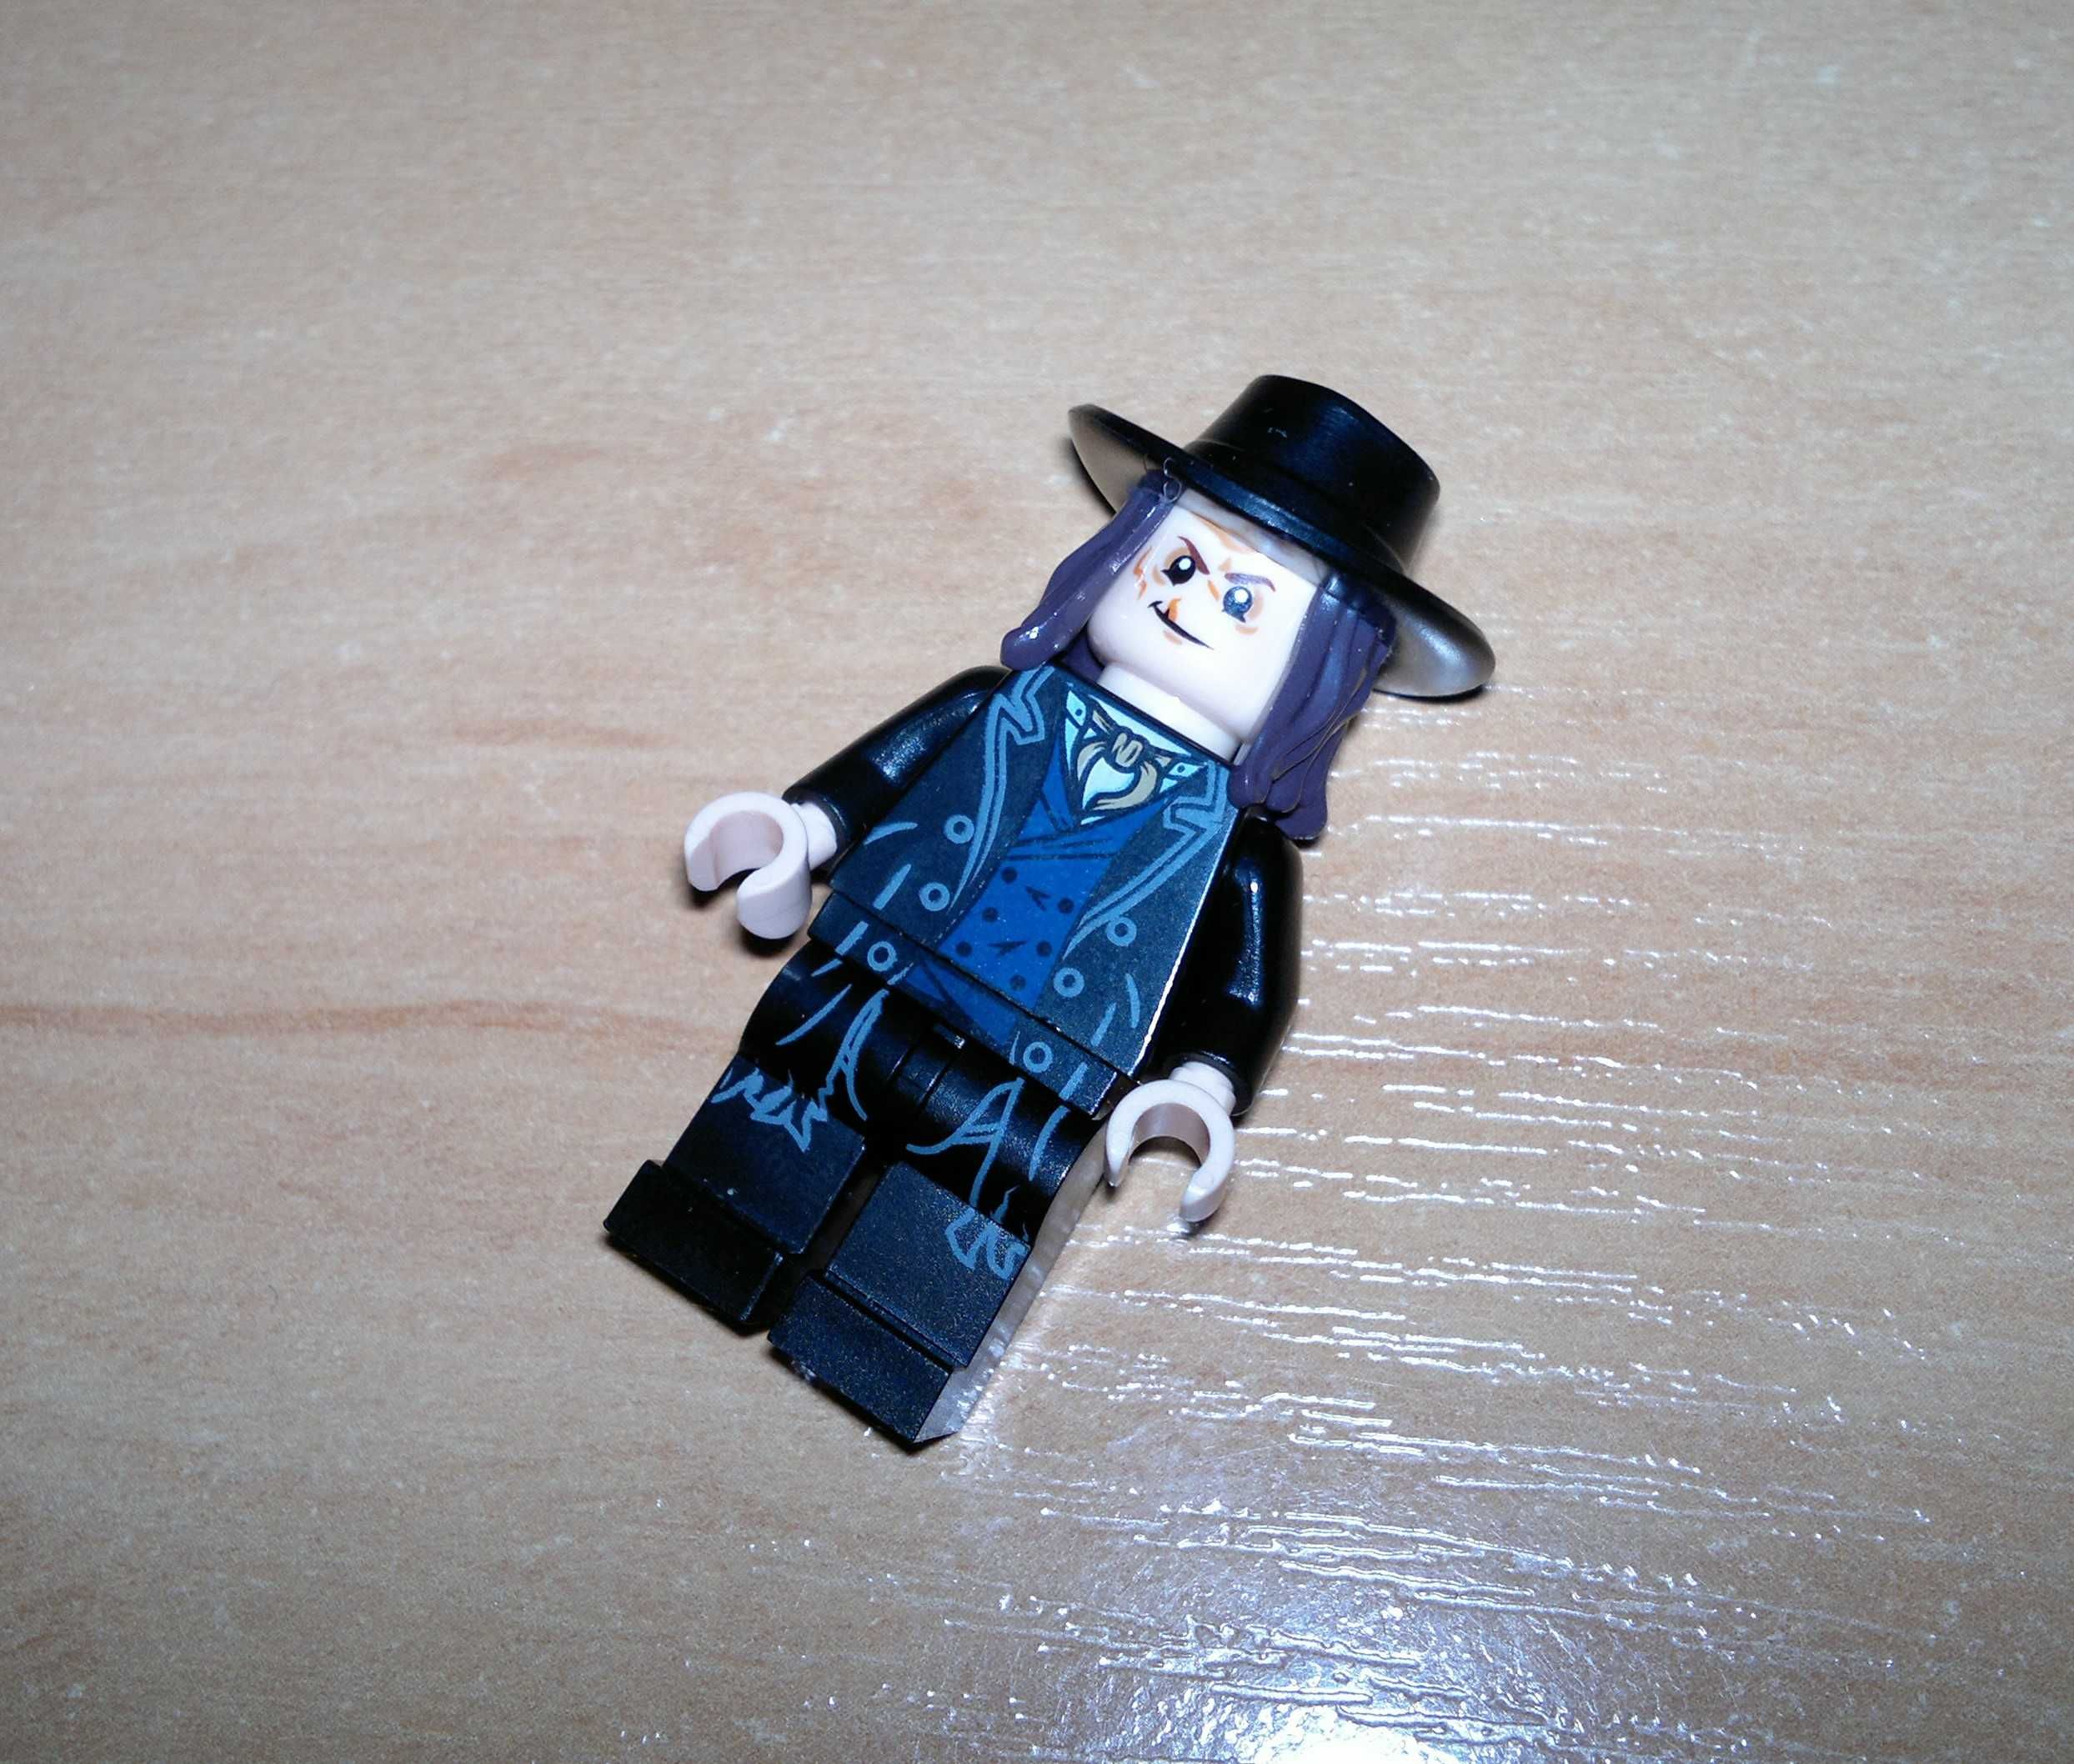 LEGO The Lone Ranger - Butch Cavendish minifigure